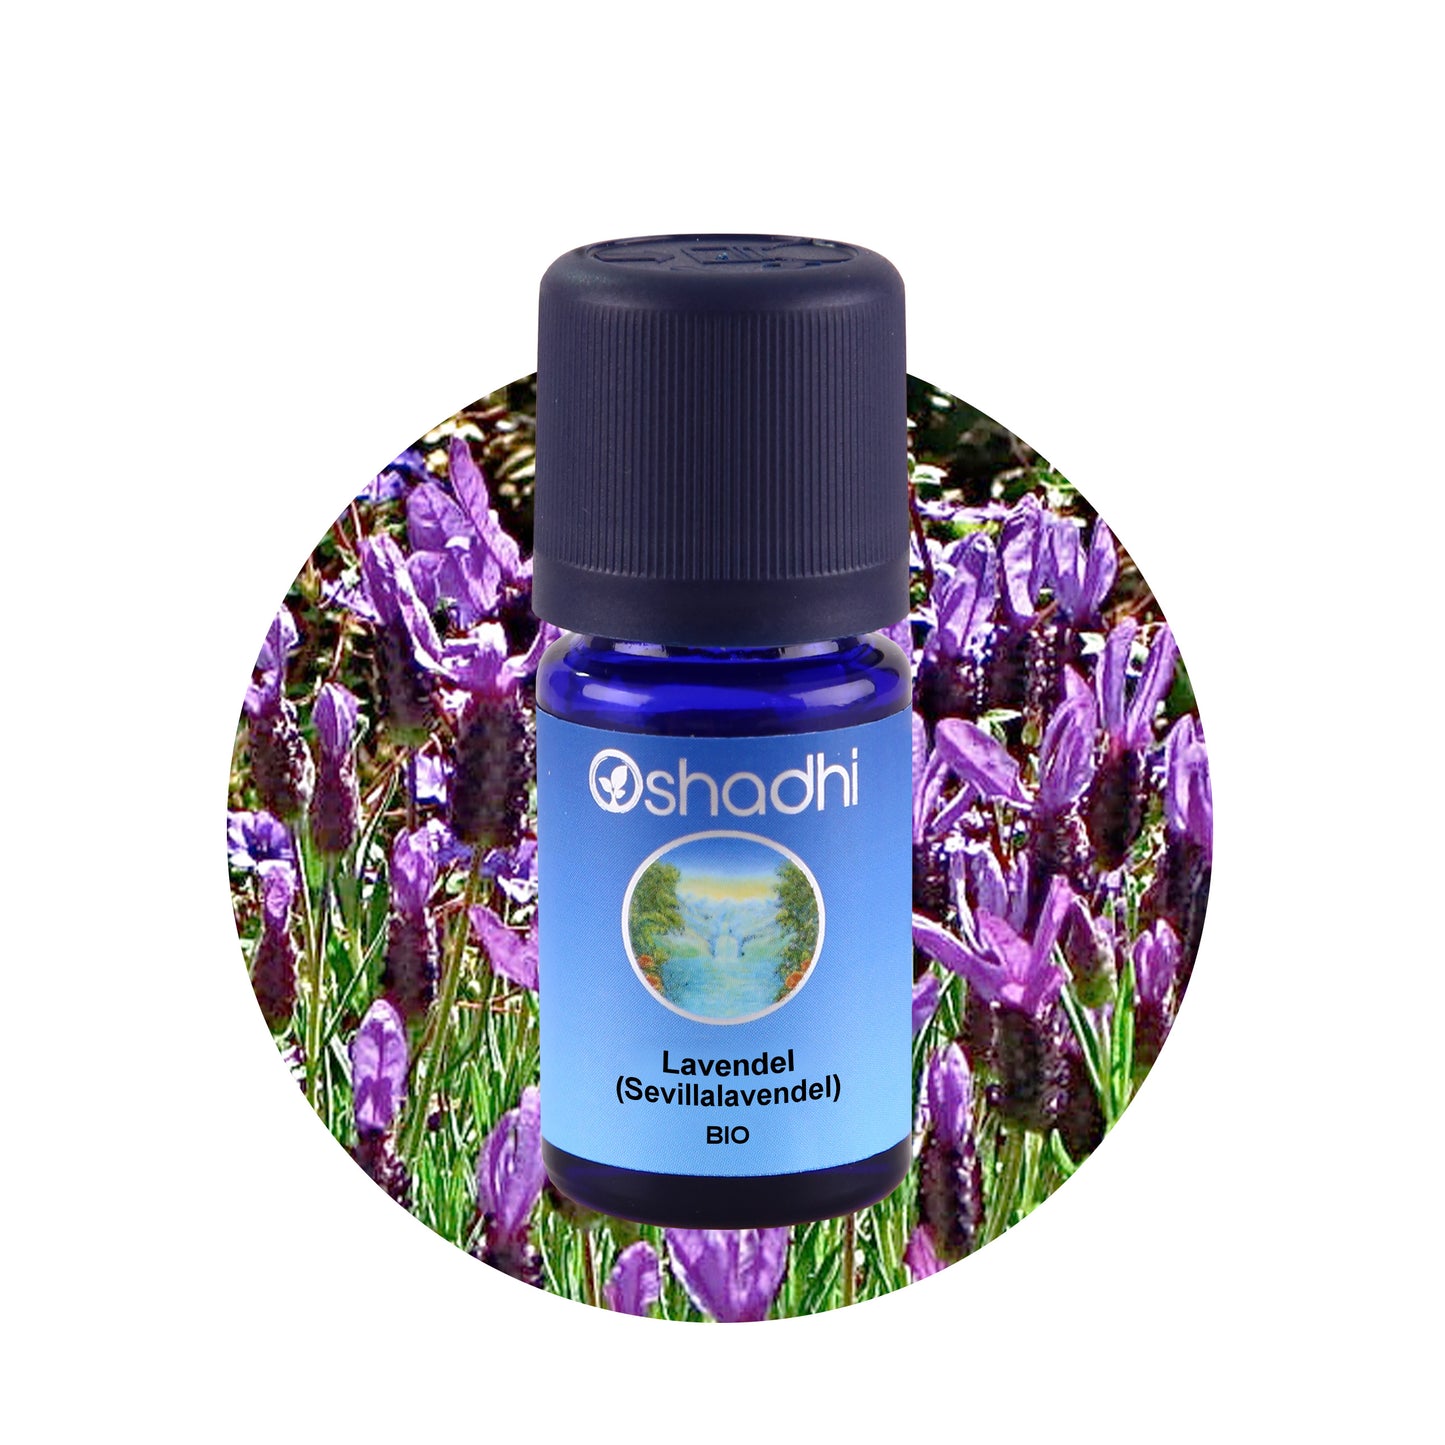 Lavendel (Sevillalavendel) EG-bio – Ätherisches Öl